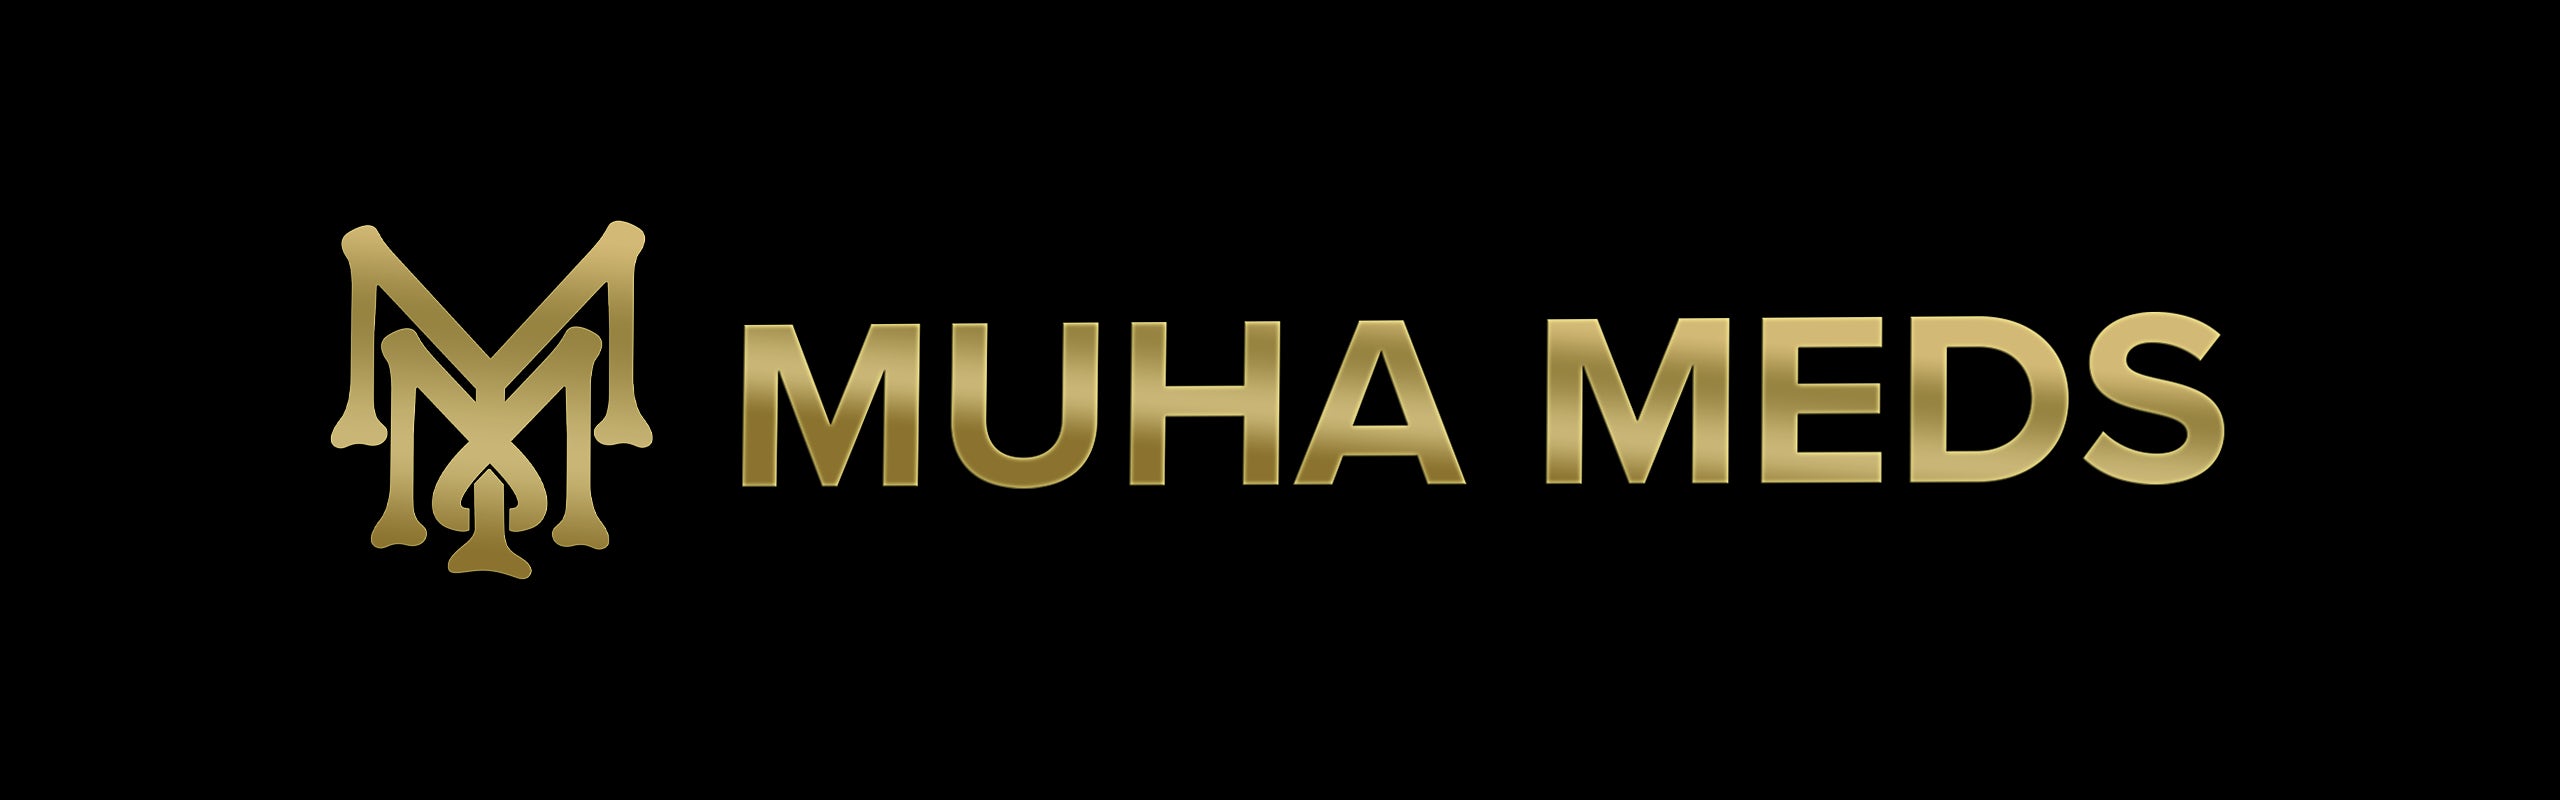 Muha Meds Products | Weedmaps